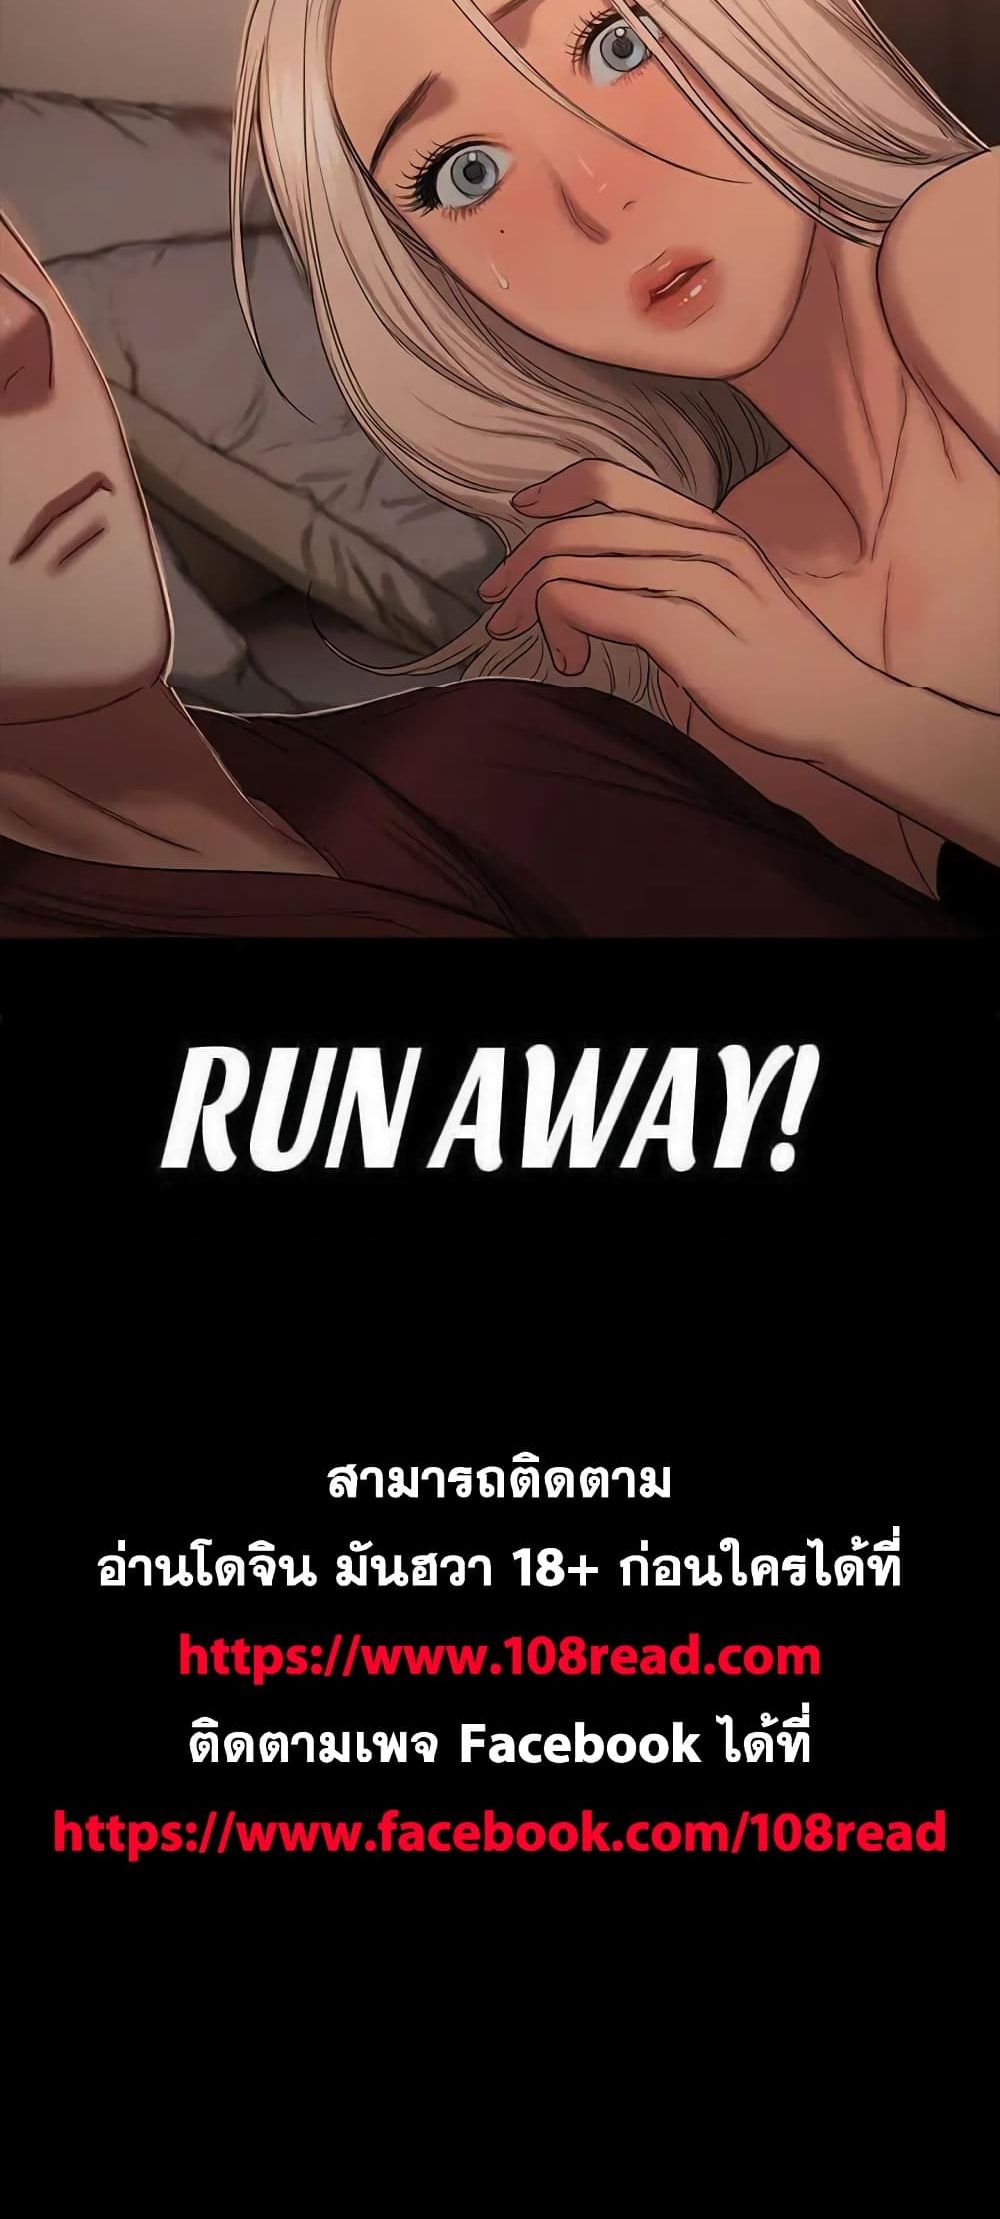 Run away 17 40